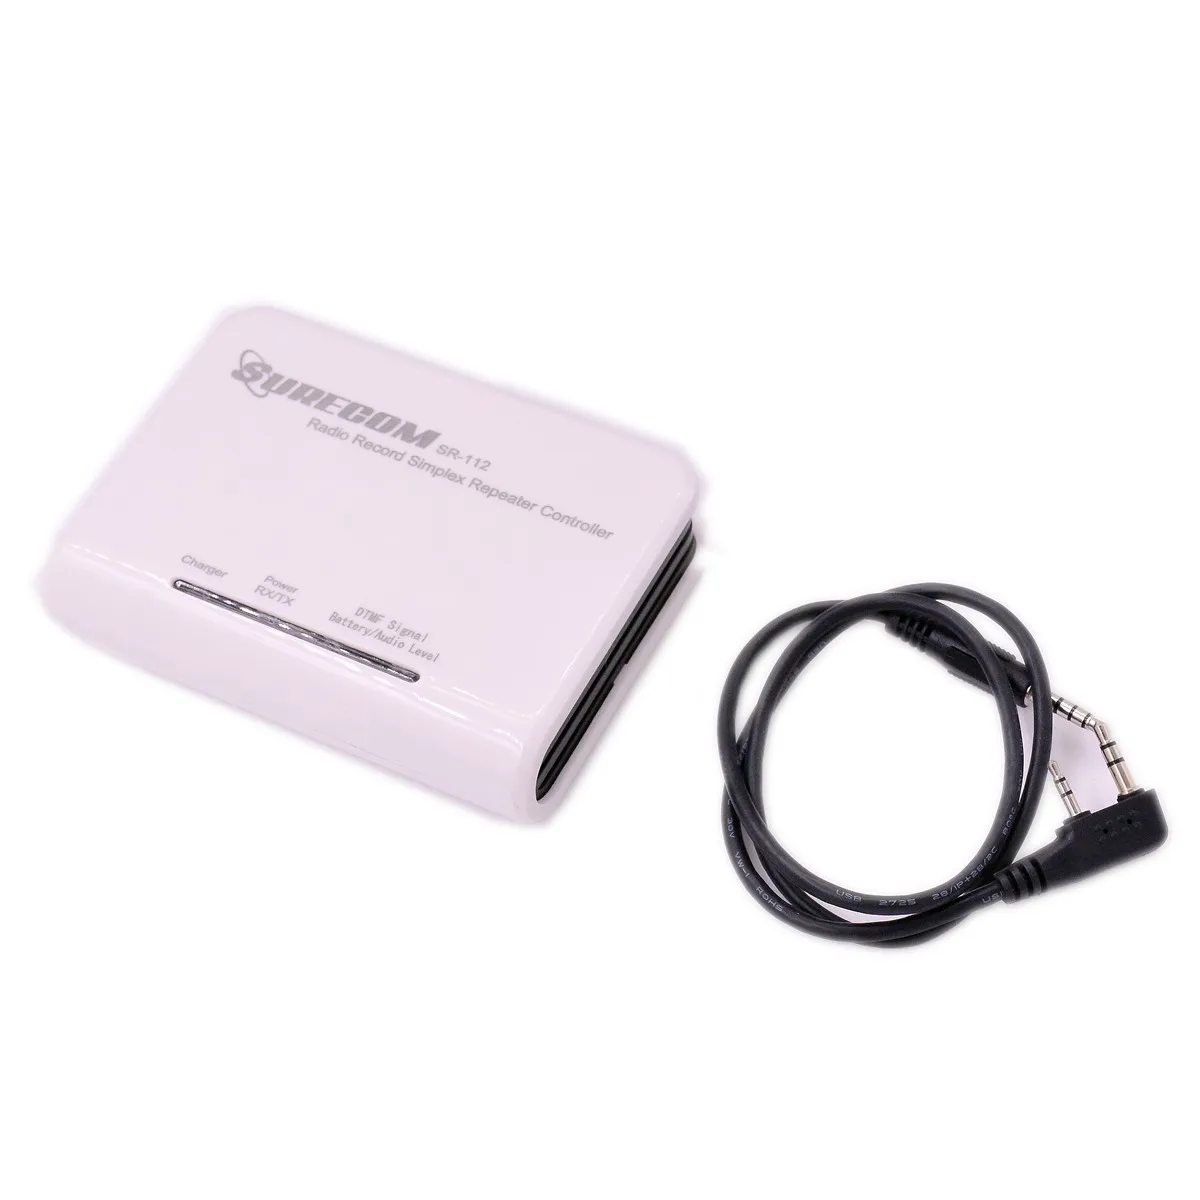 surecom-sr112-simplex-repeater-controller-cross-band-radio-diy-repeat-box-for-mobile-ham-walkie-talkie-relay-tools-accessory